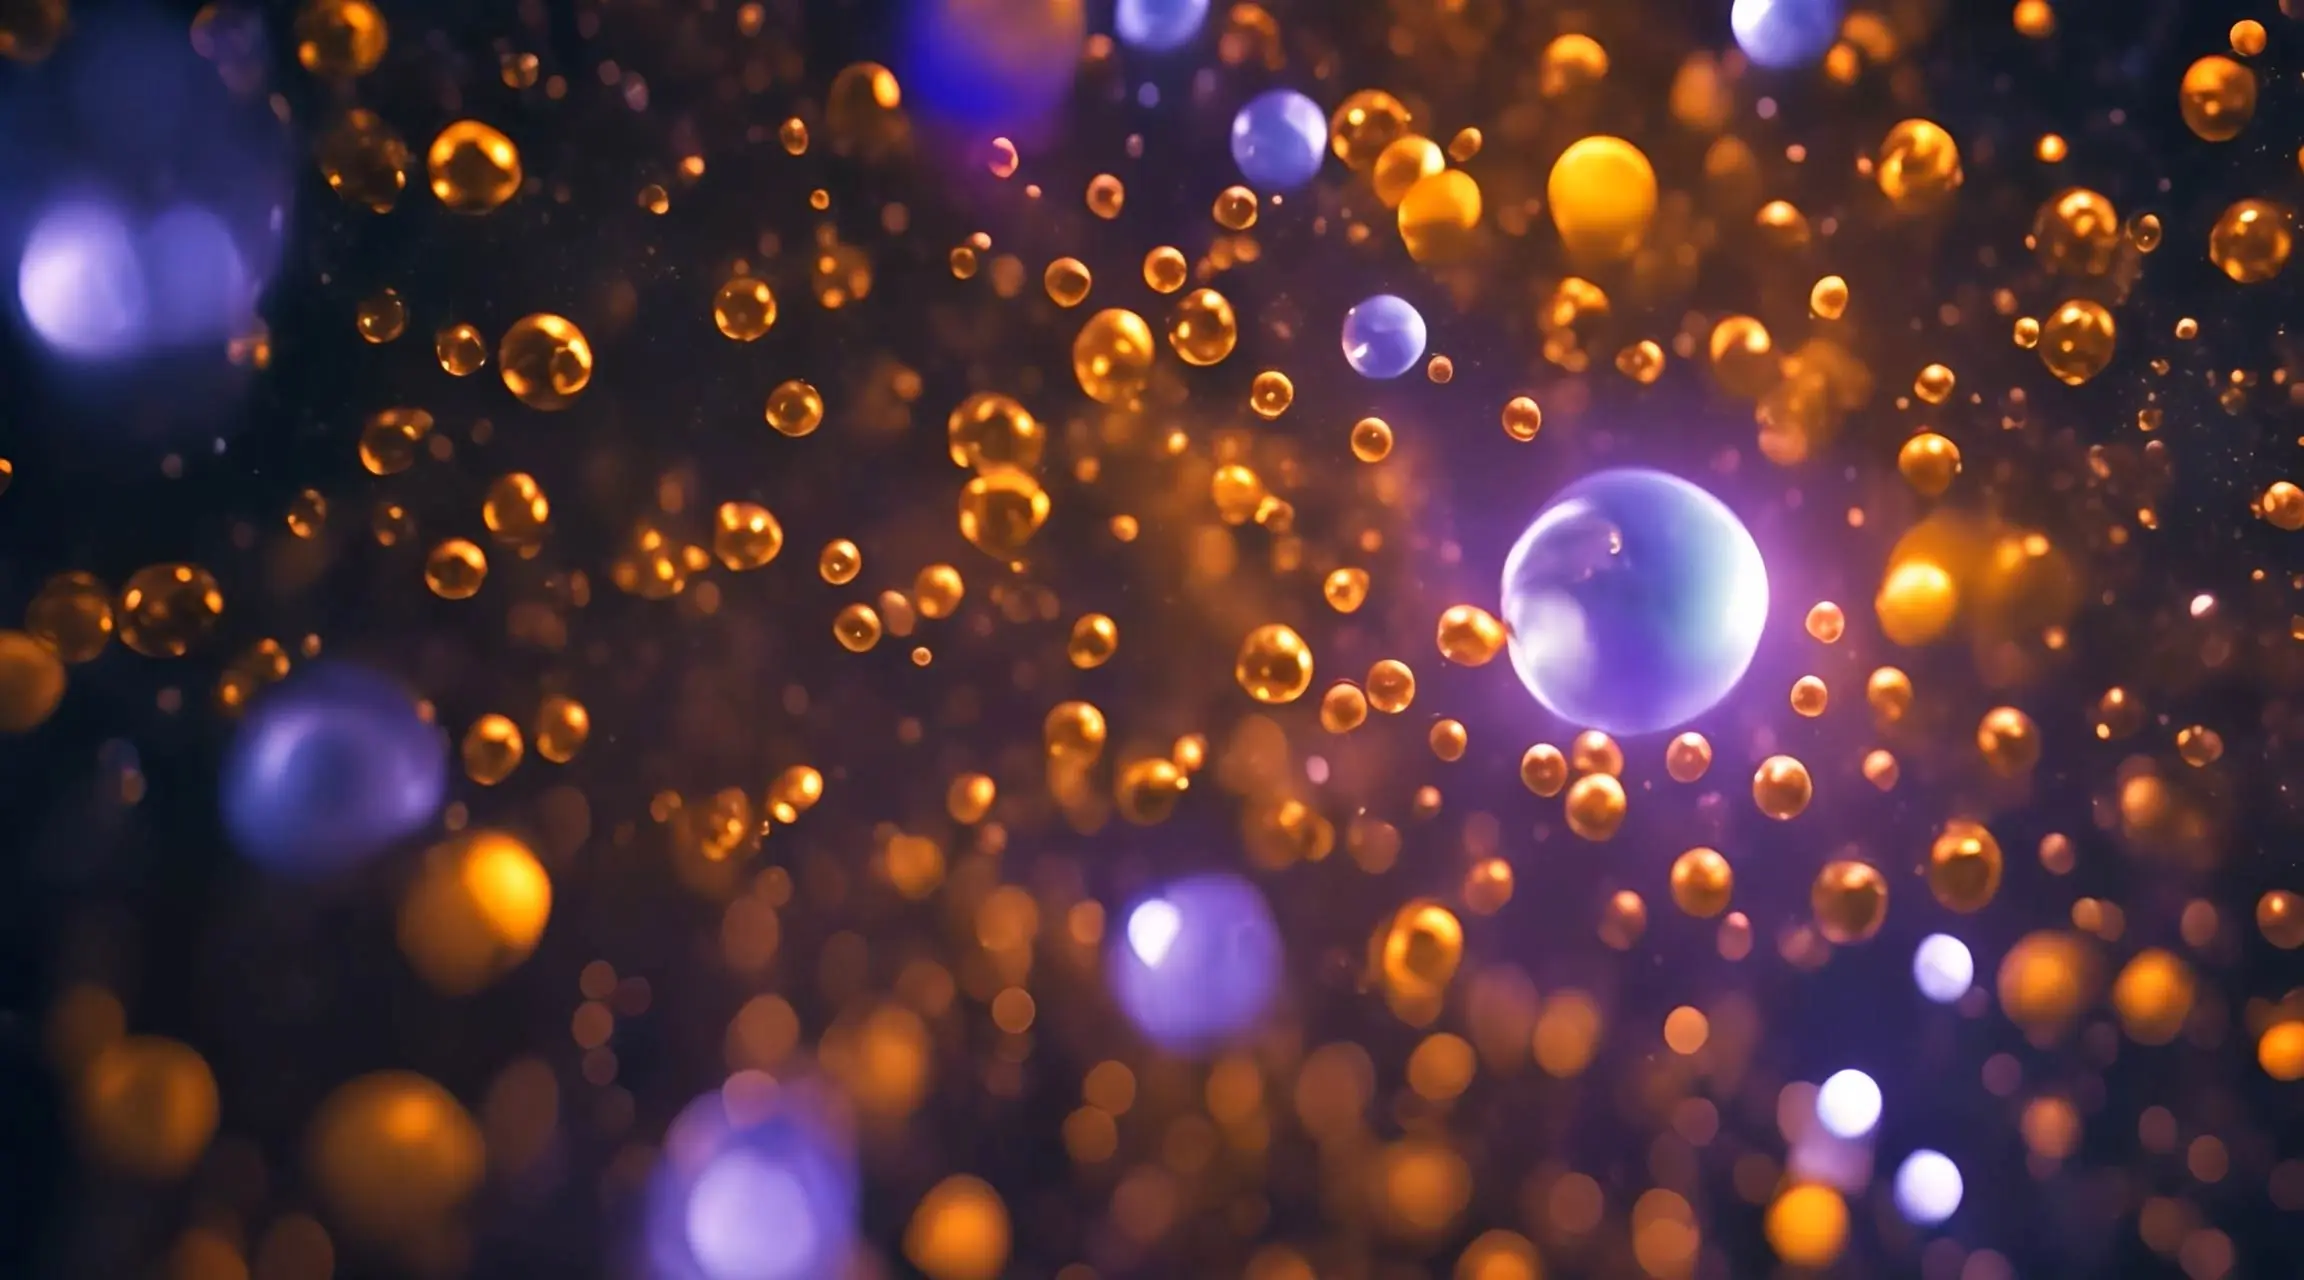 Dynamic Floating Glowing Bubble Effects